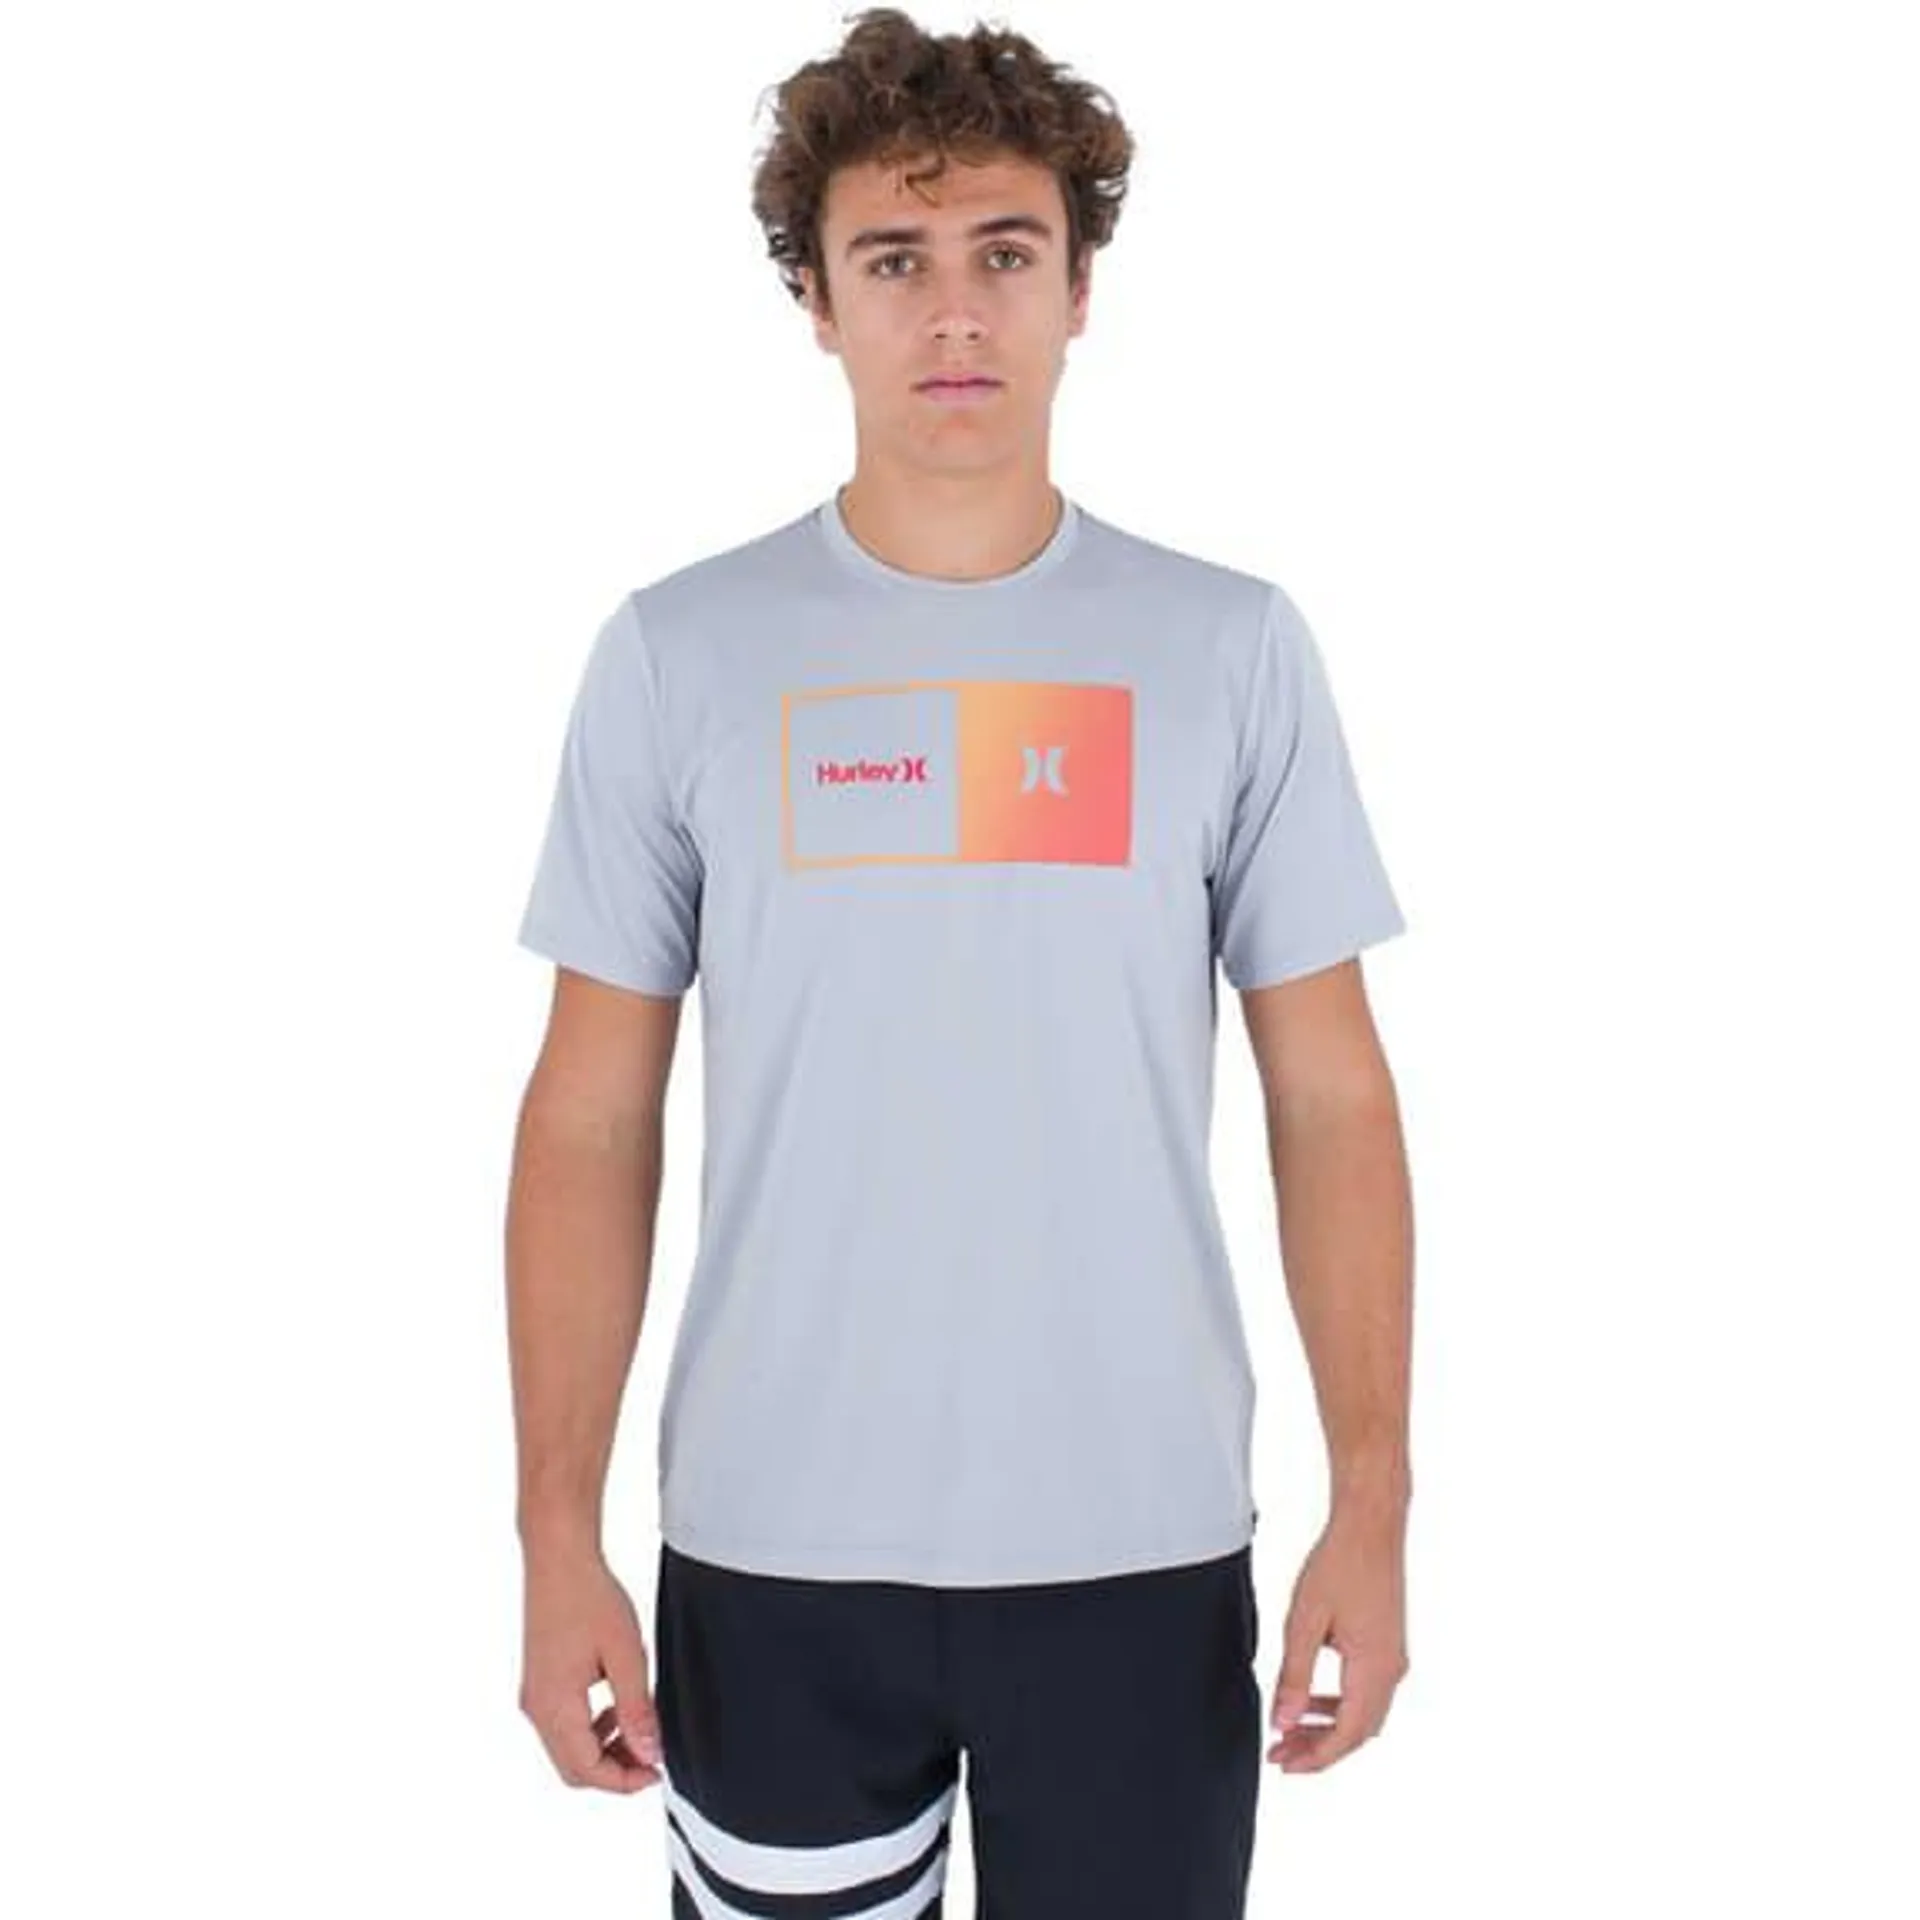 T-shirt Hurley Everyday Hybrid manche courte gris orange rouge